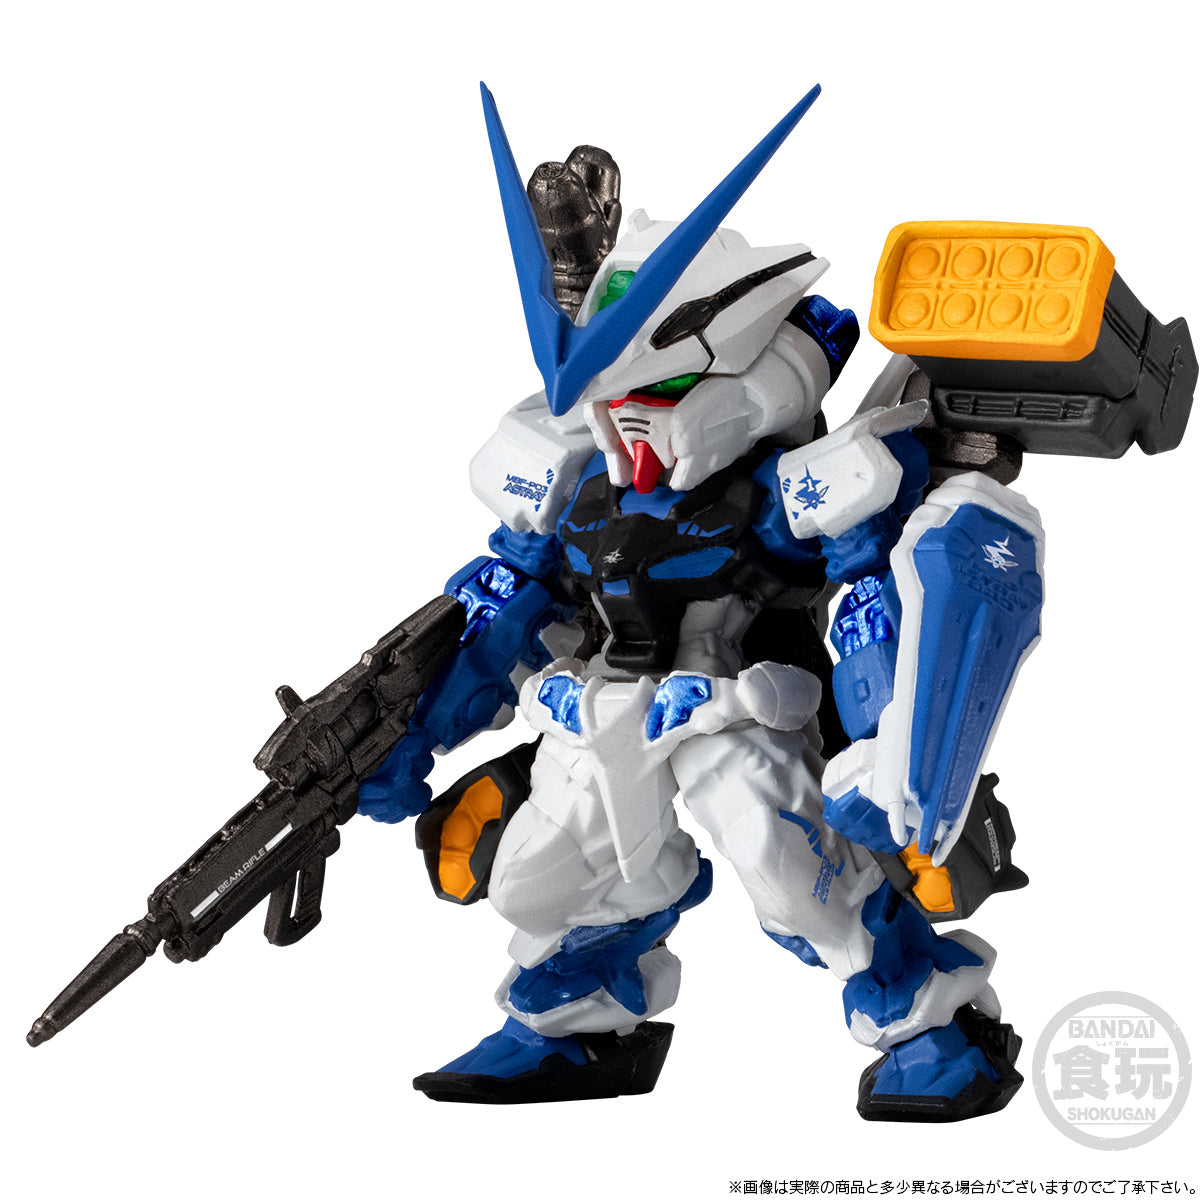 Bandai - Shokugan - FW Gundam Converge - Mobile Suit Gundam SEED - Core Astray Red & Blue Set - Marvelous Toys